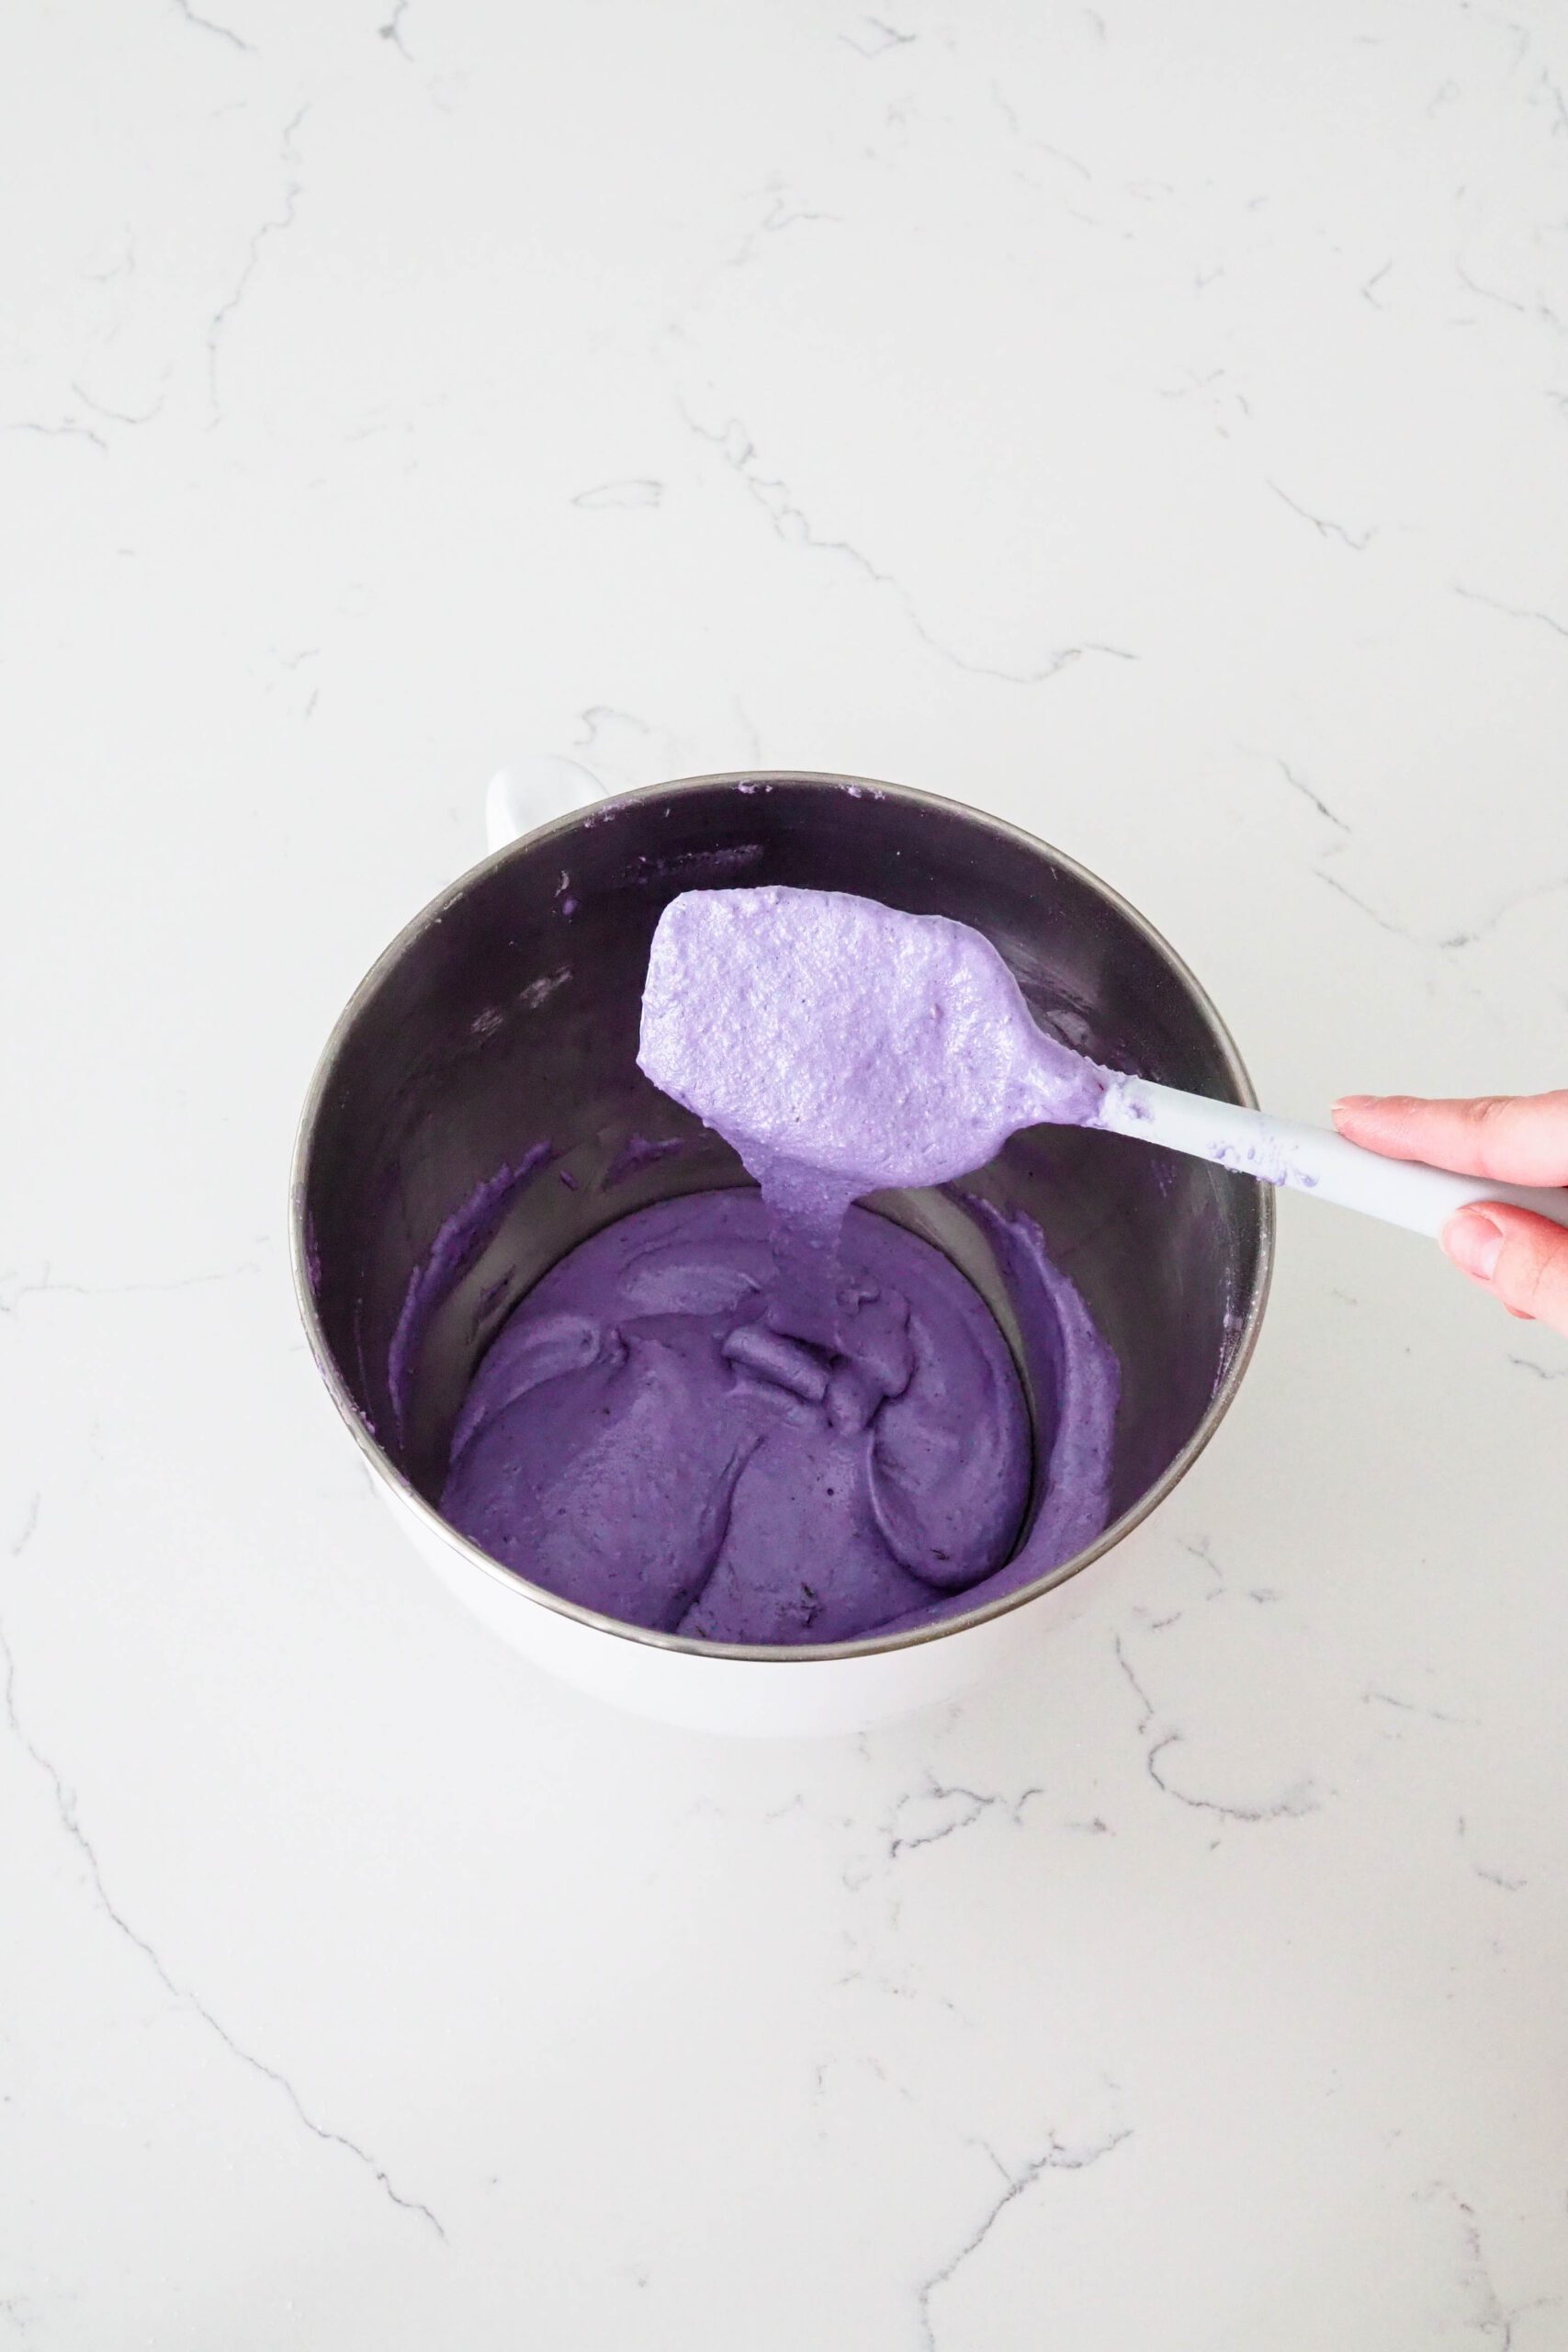 A spatula drips purple macaron batter back into the bowl.